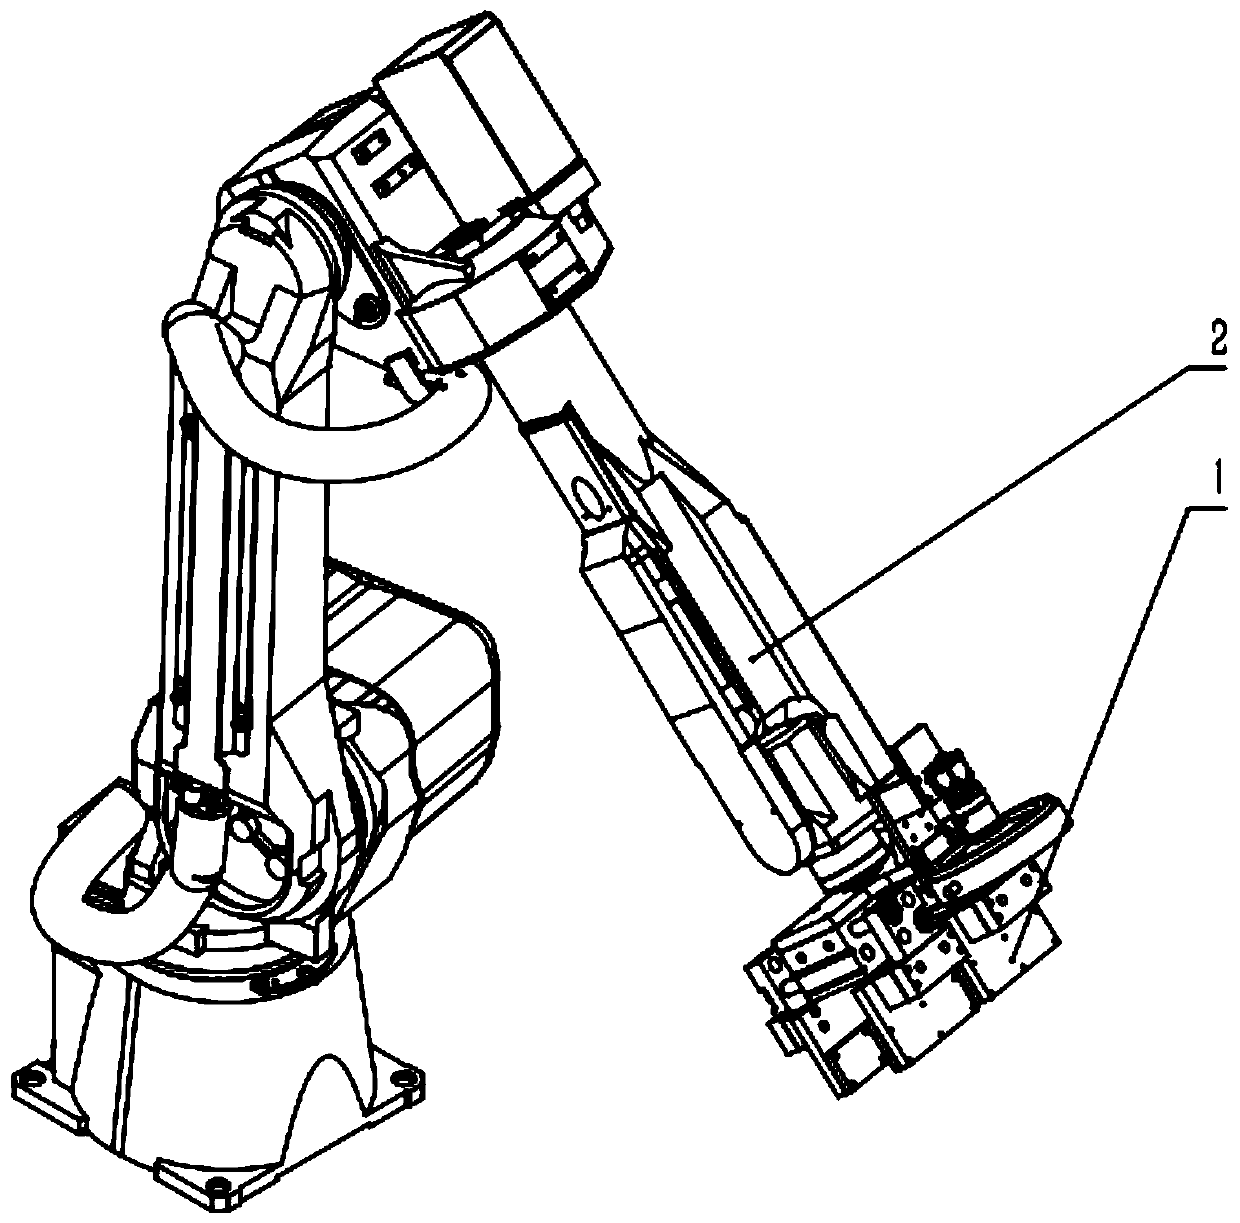 Manipulator fixture and robot